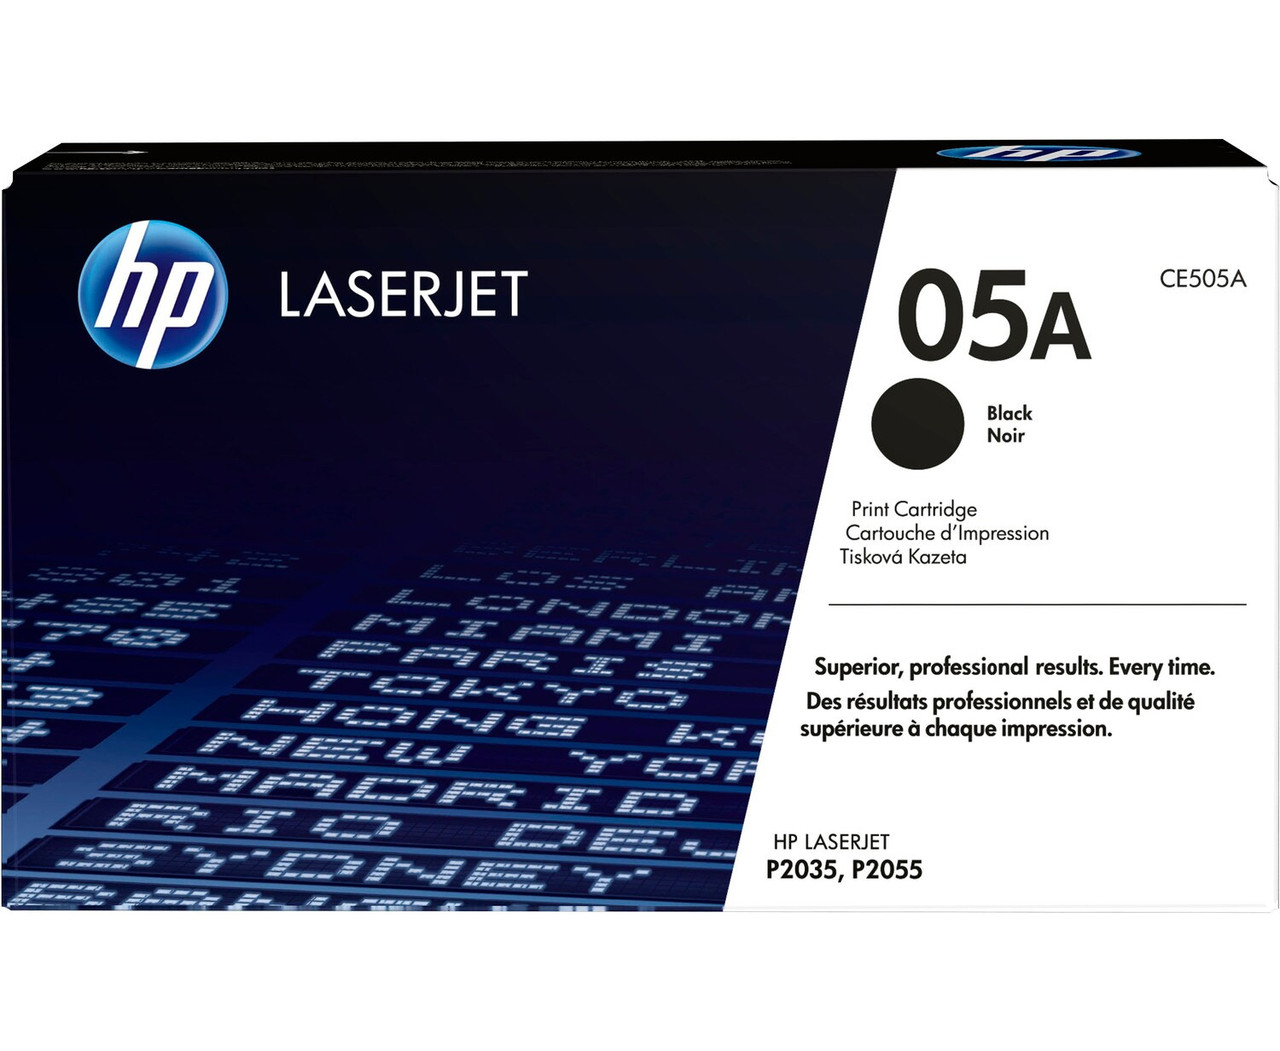 EMEA version - HP LaserJet 05A Black Print Cartridge